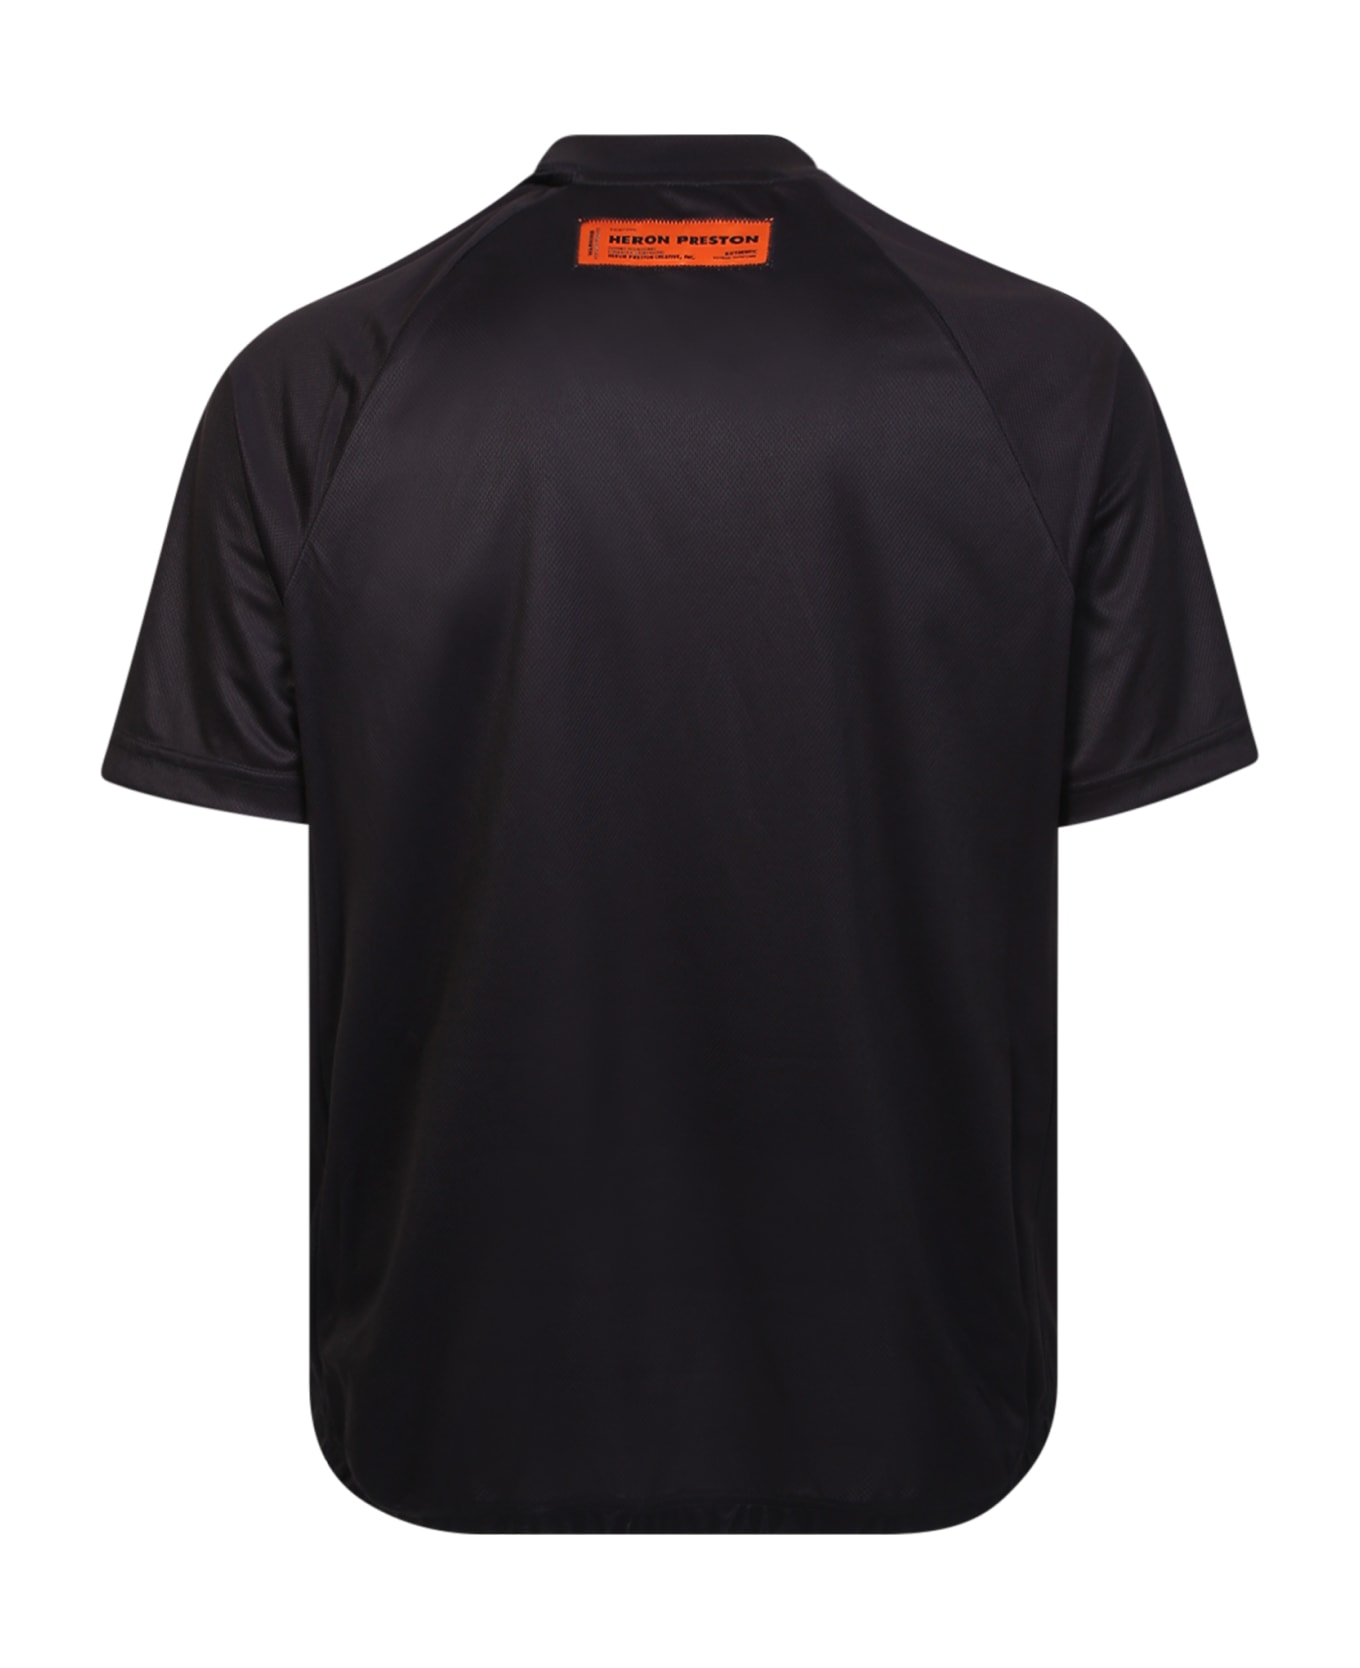 HERON PRESTON Dry Fit T-shirt - Black